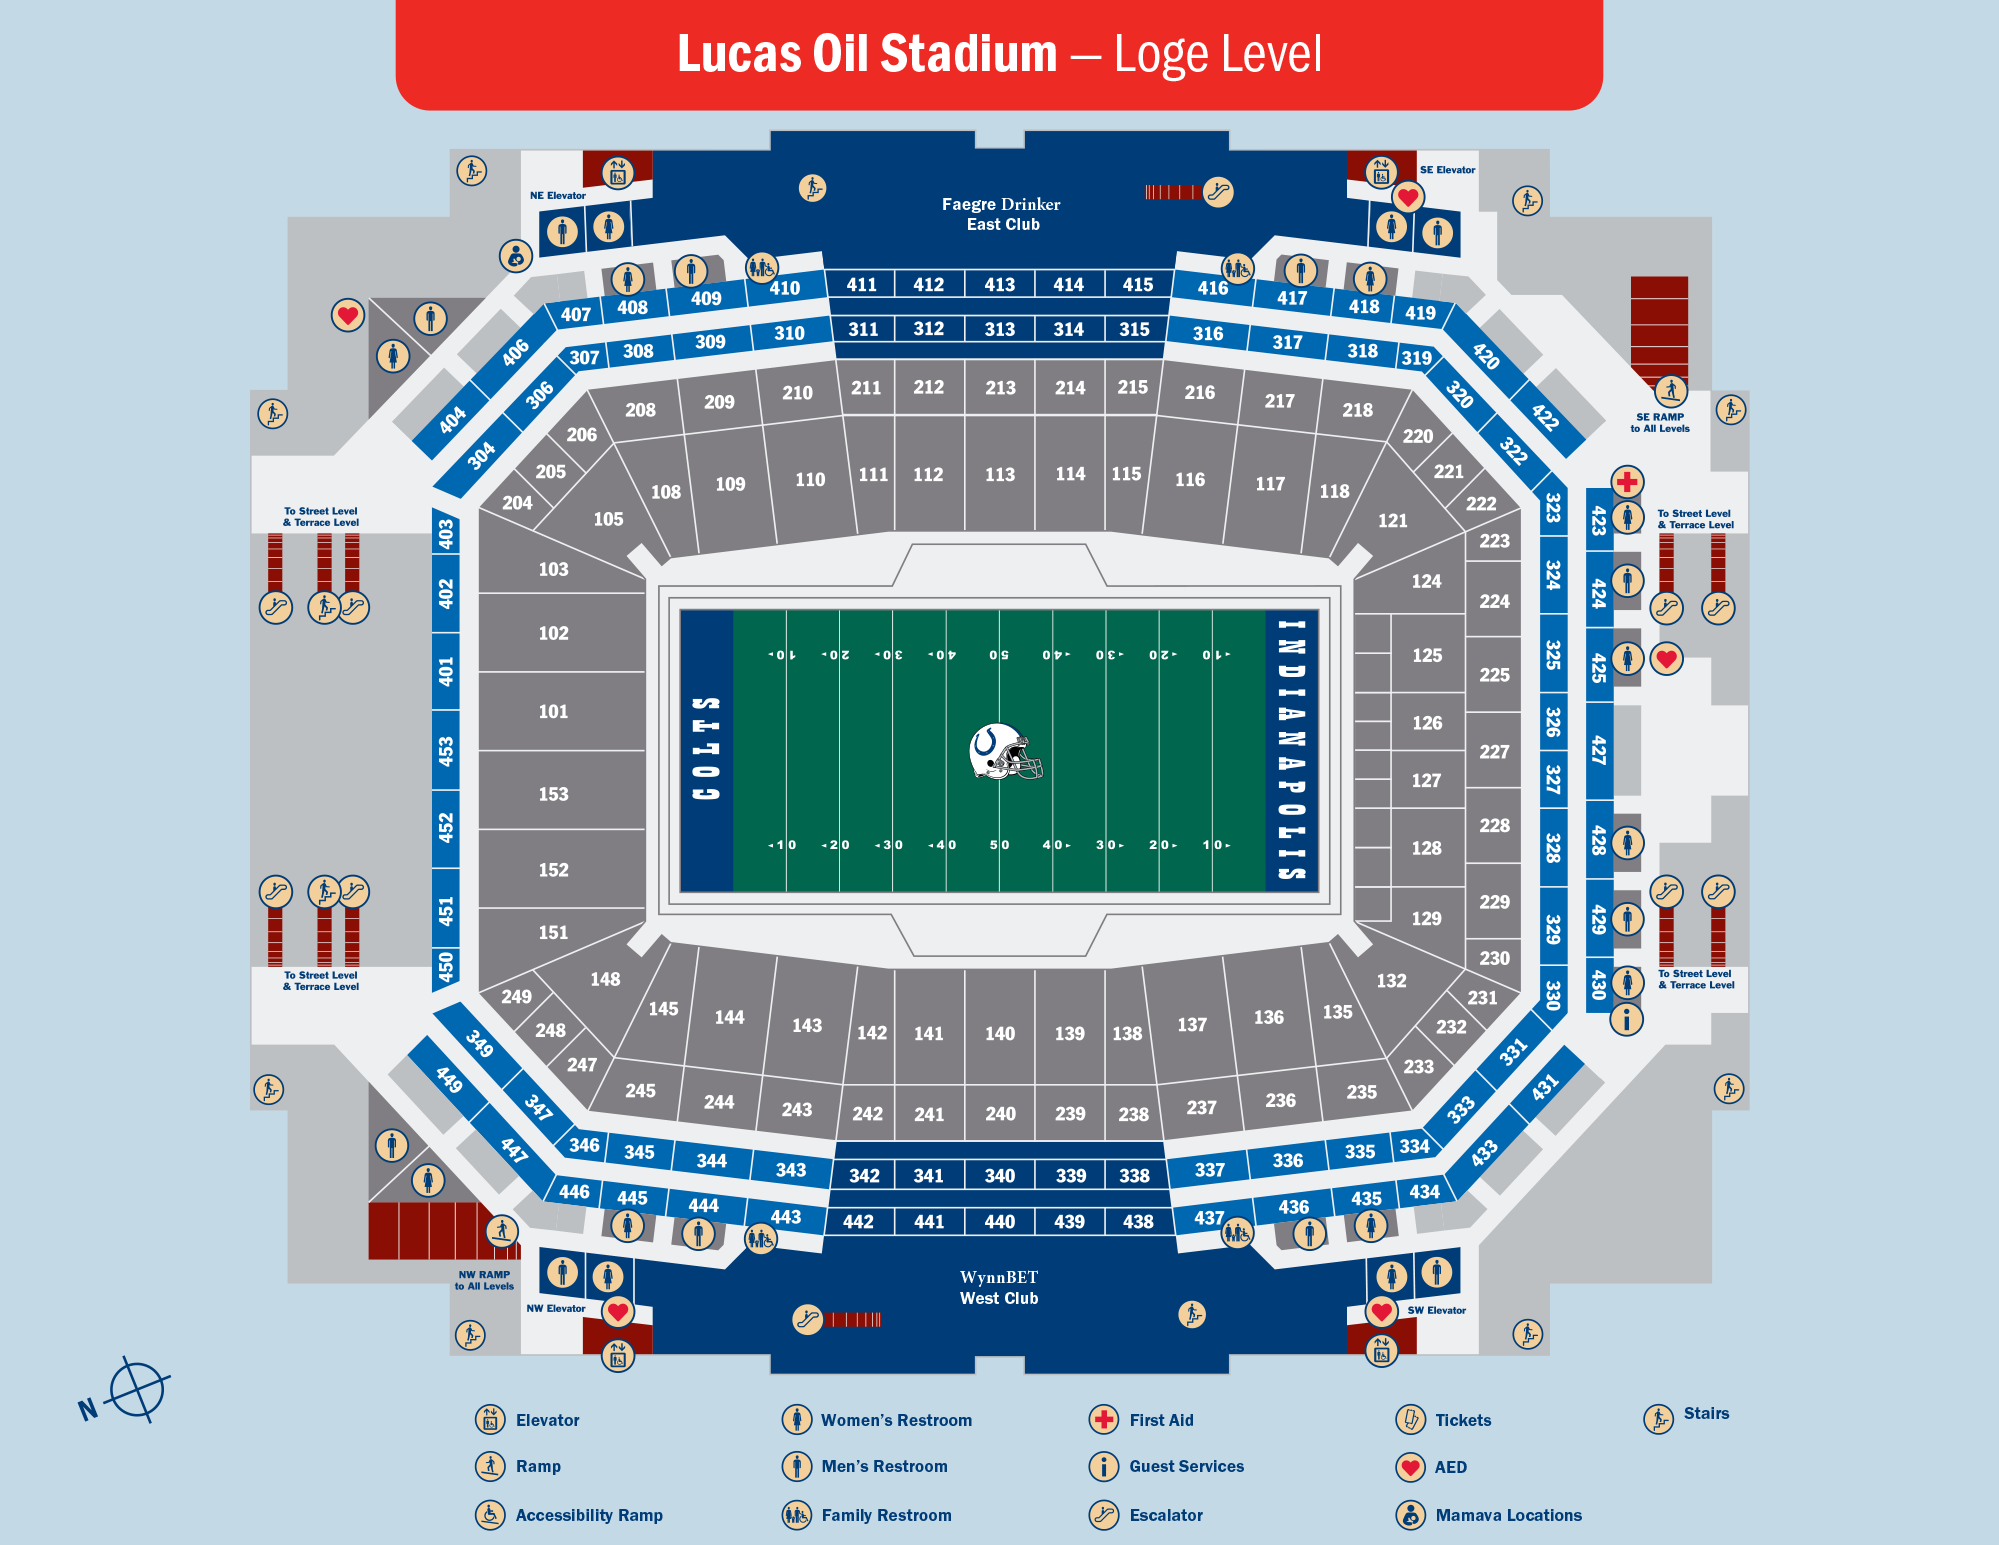 Lucas Oil Stadium Maps By Level